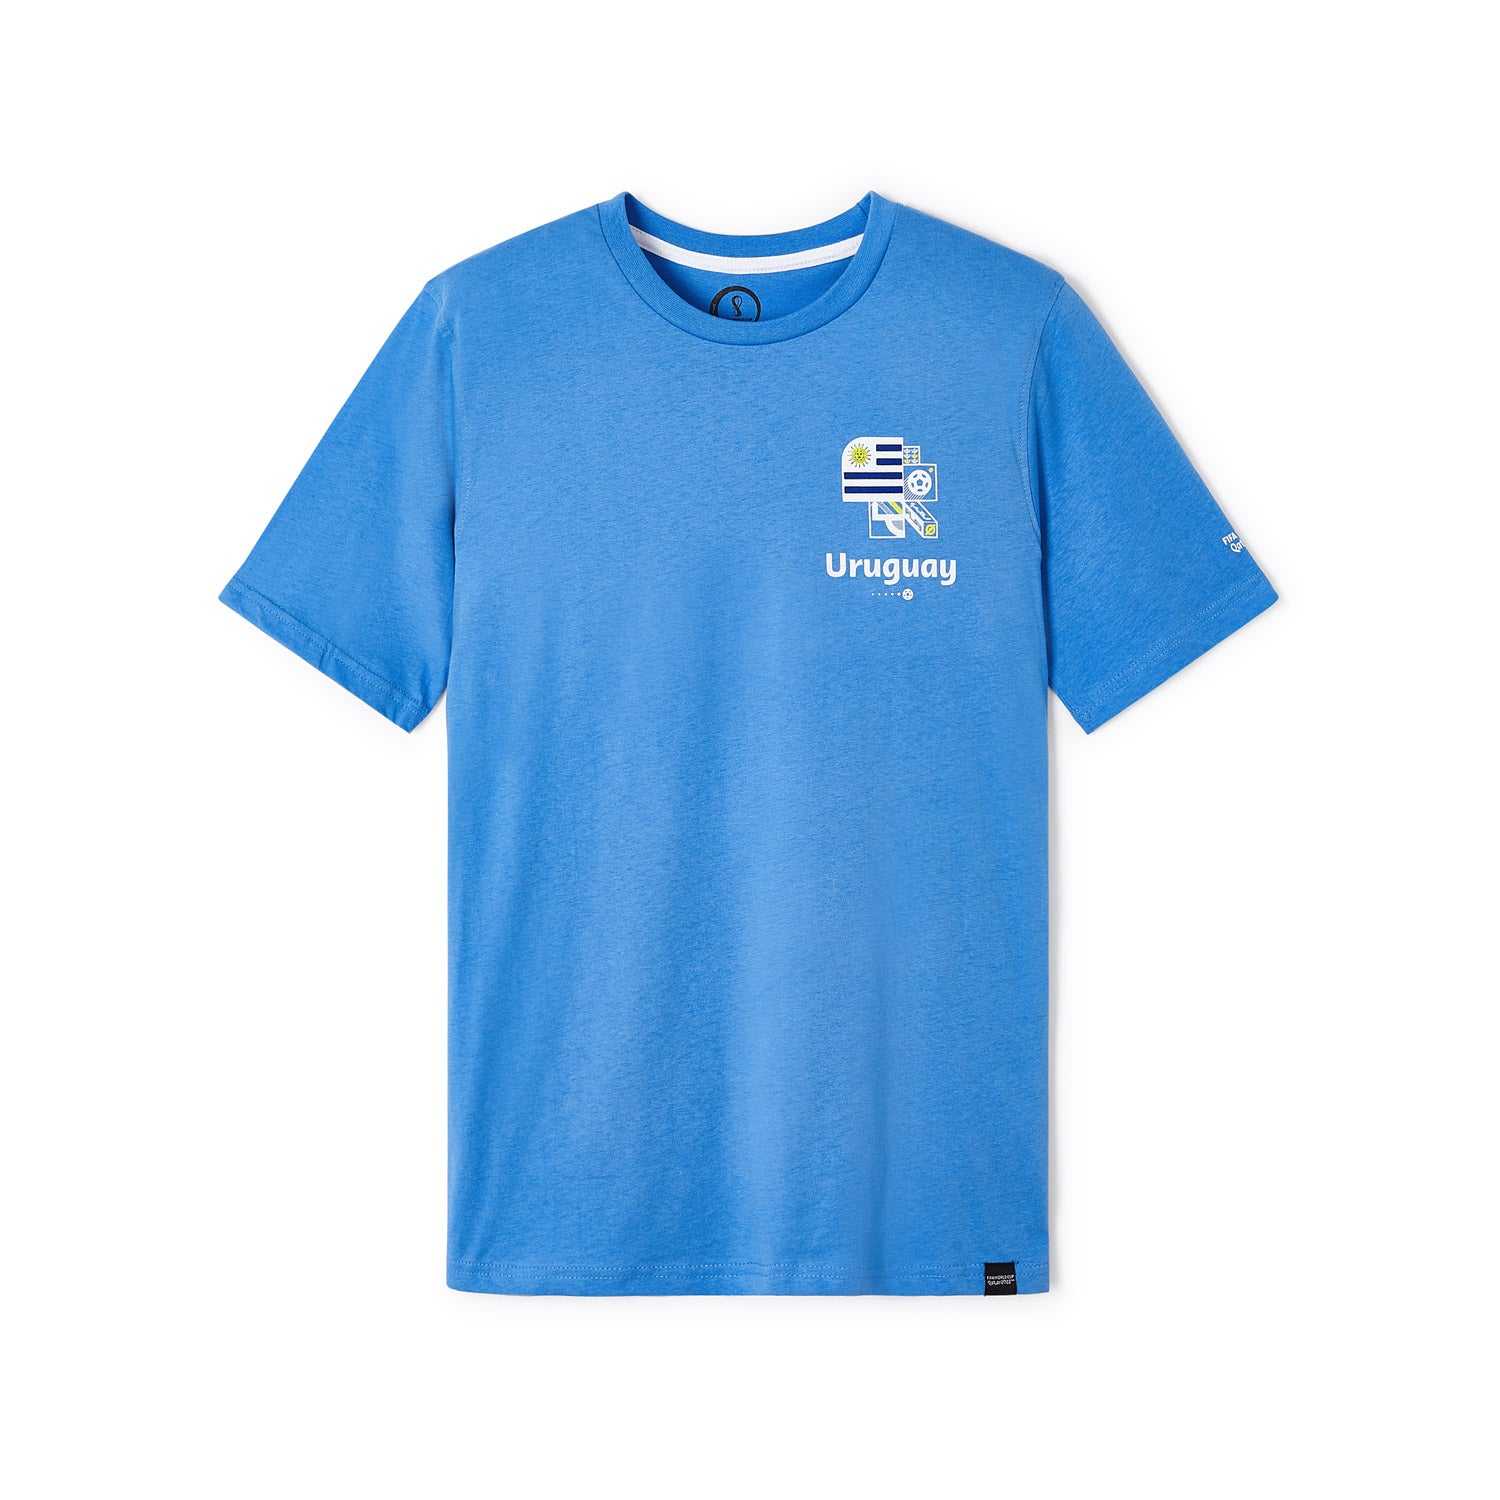 2022 World Cup Uruguay Blue T-Shirt - Men's